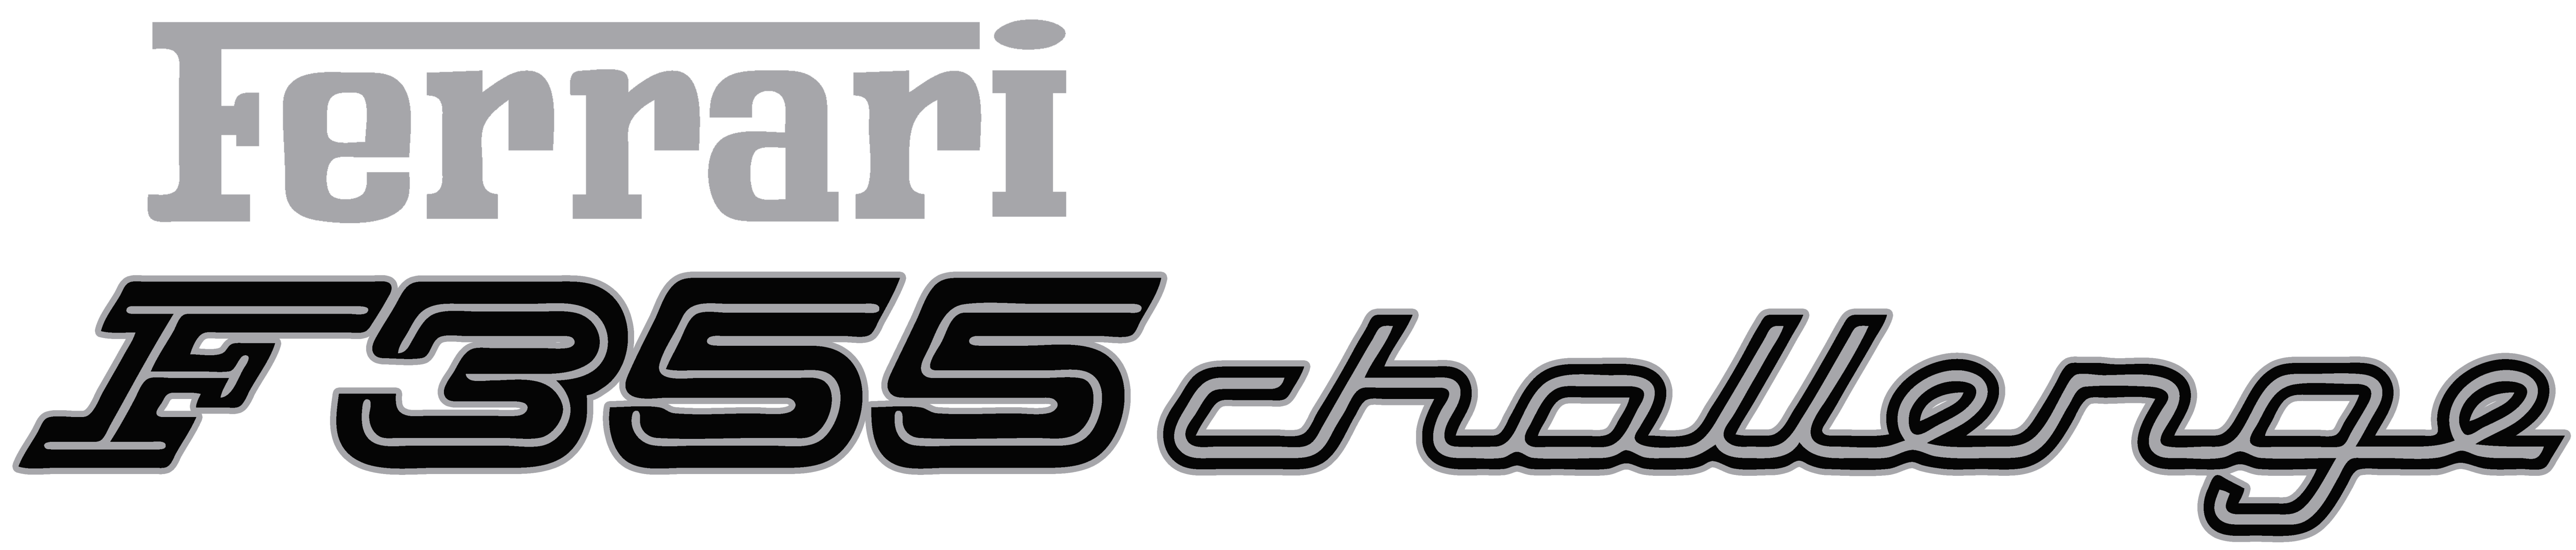 Ferrari F355 Challenge Images - LaunchBox Games Database